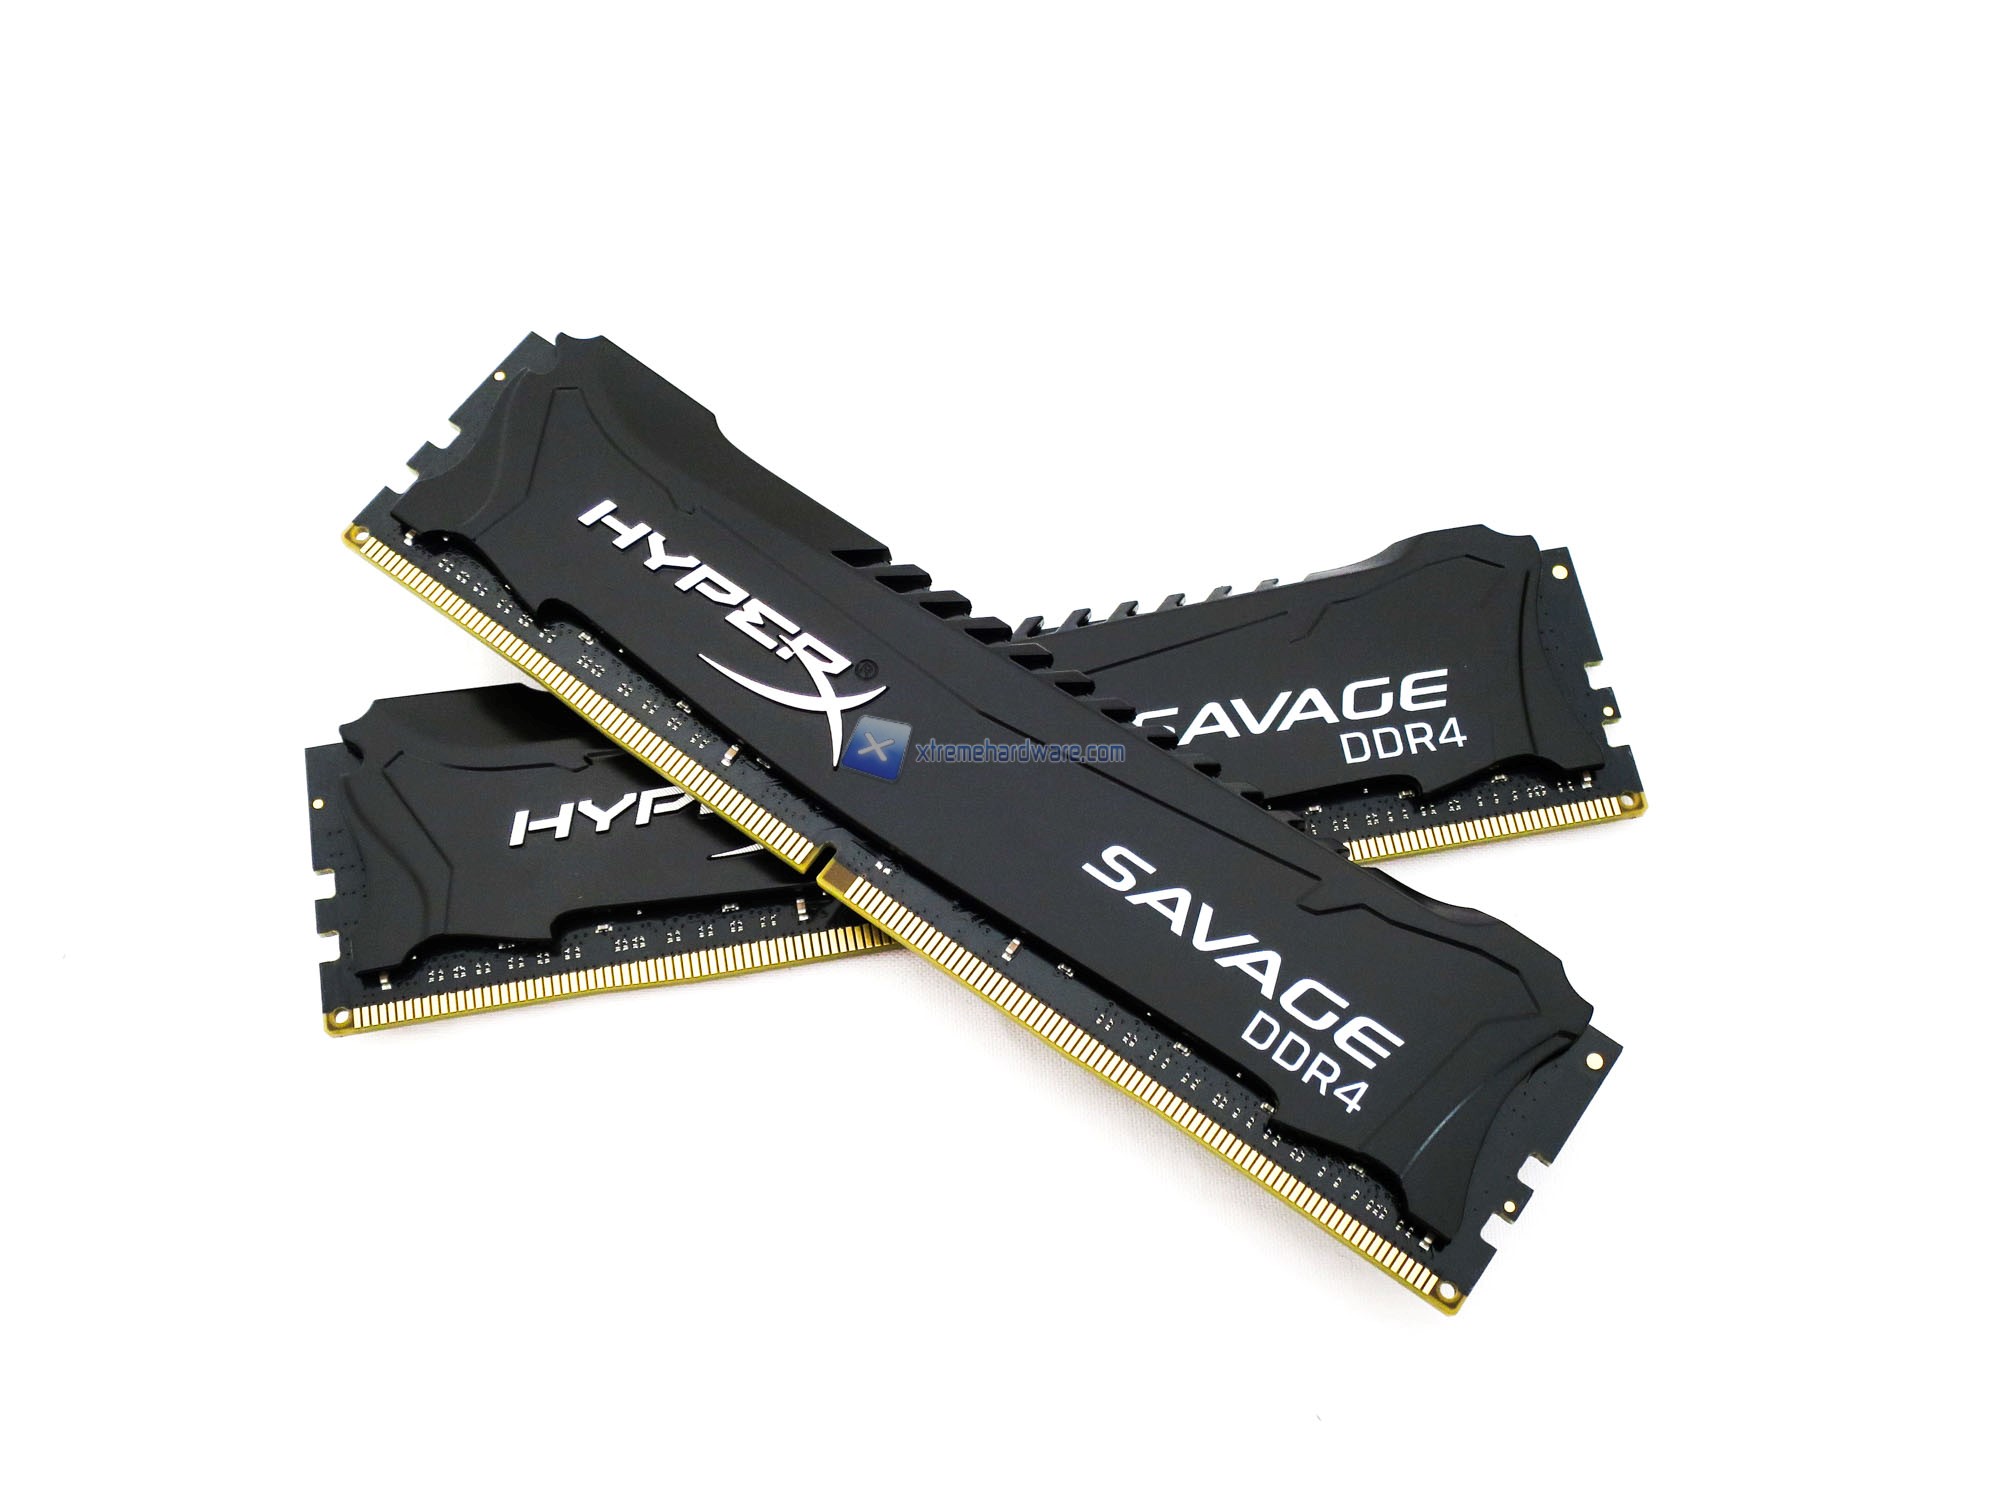 HyperX Savage DDR4 3000 9